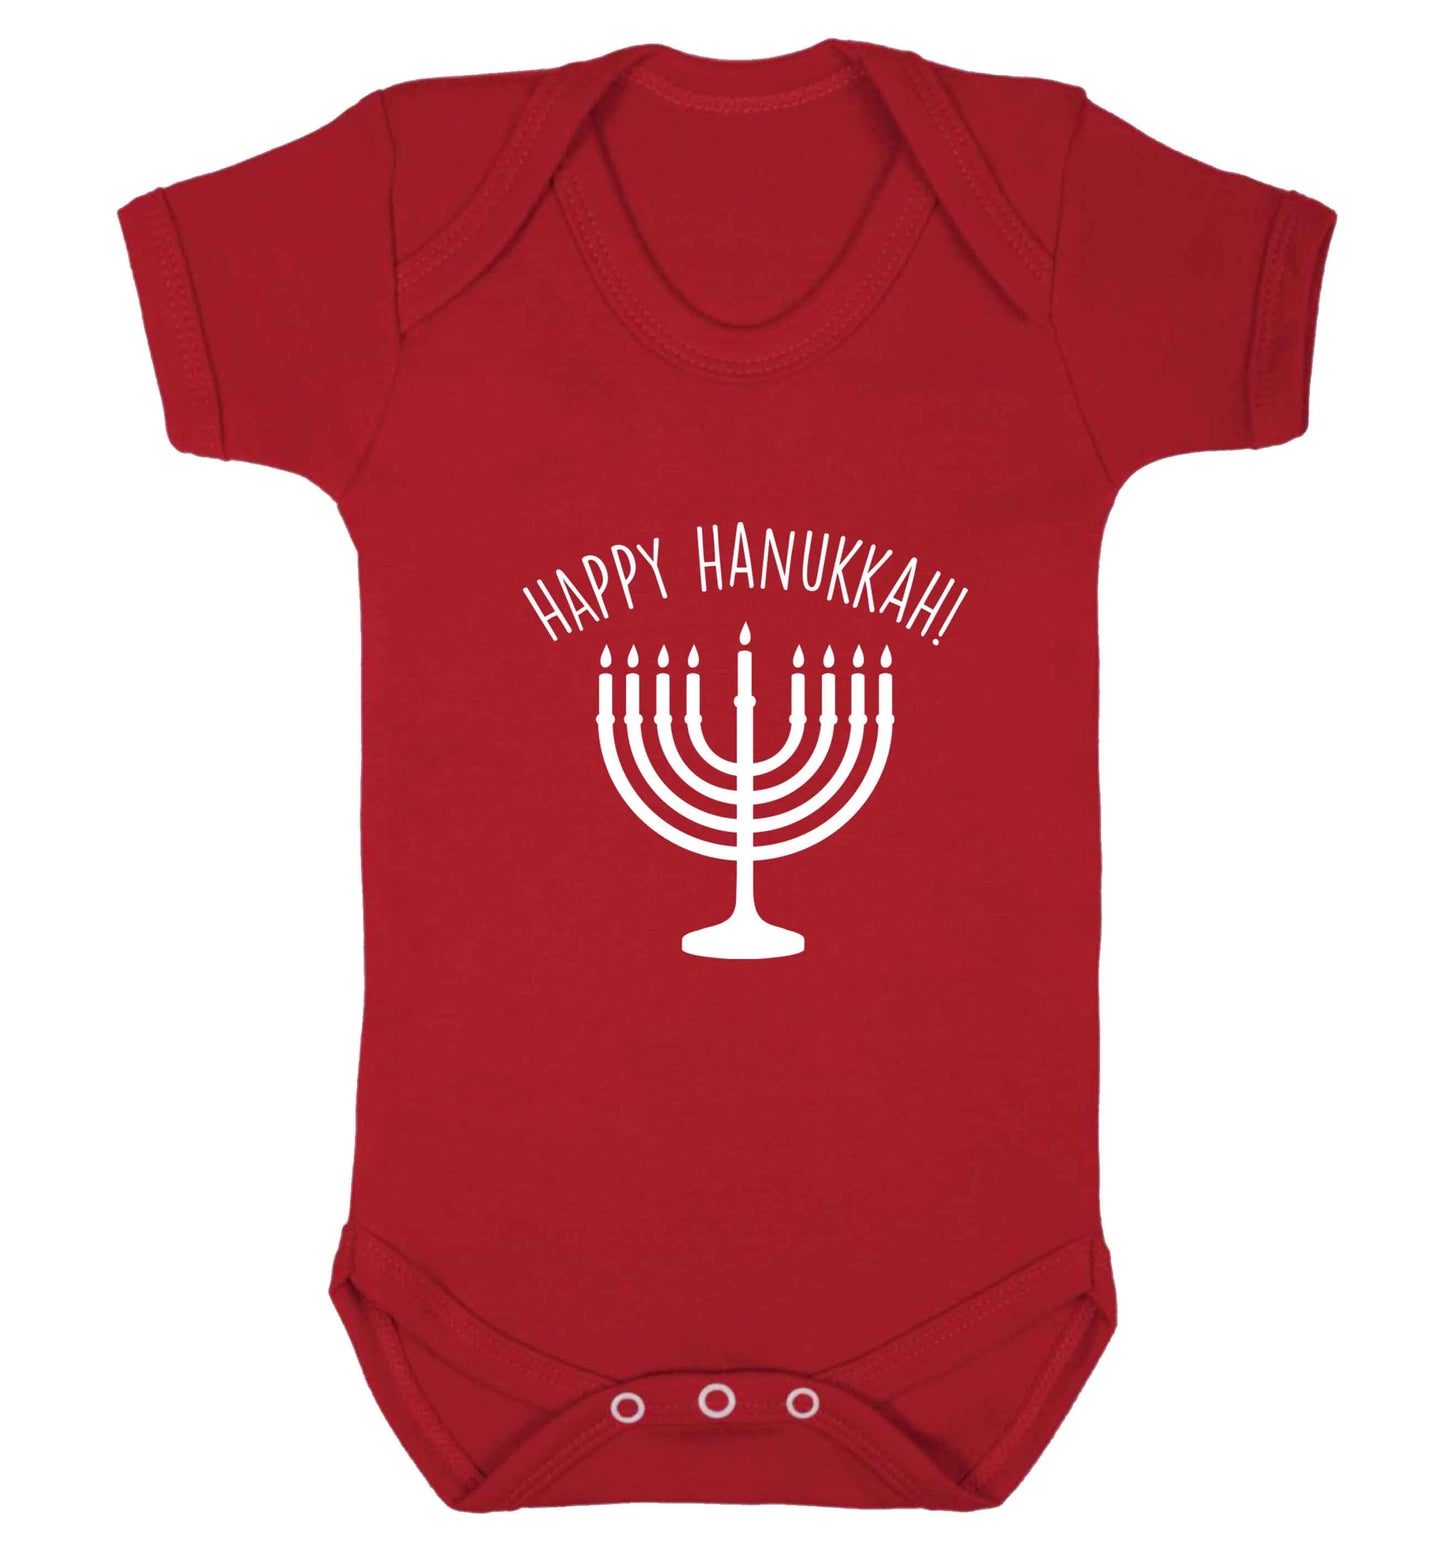 Happy hanukkah baby vest red 18-24 months